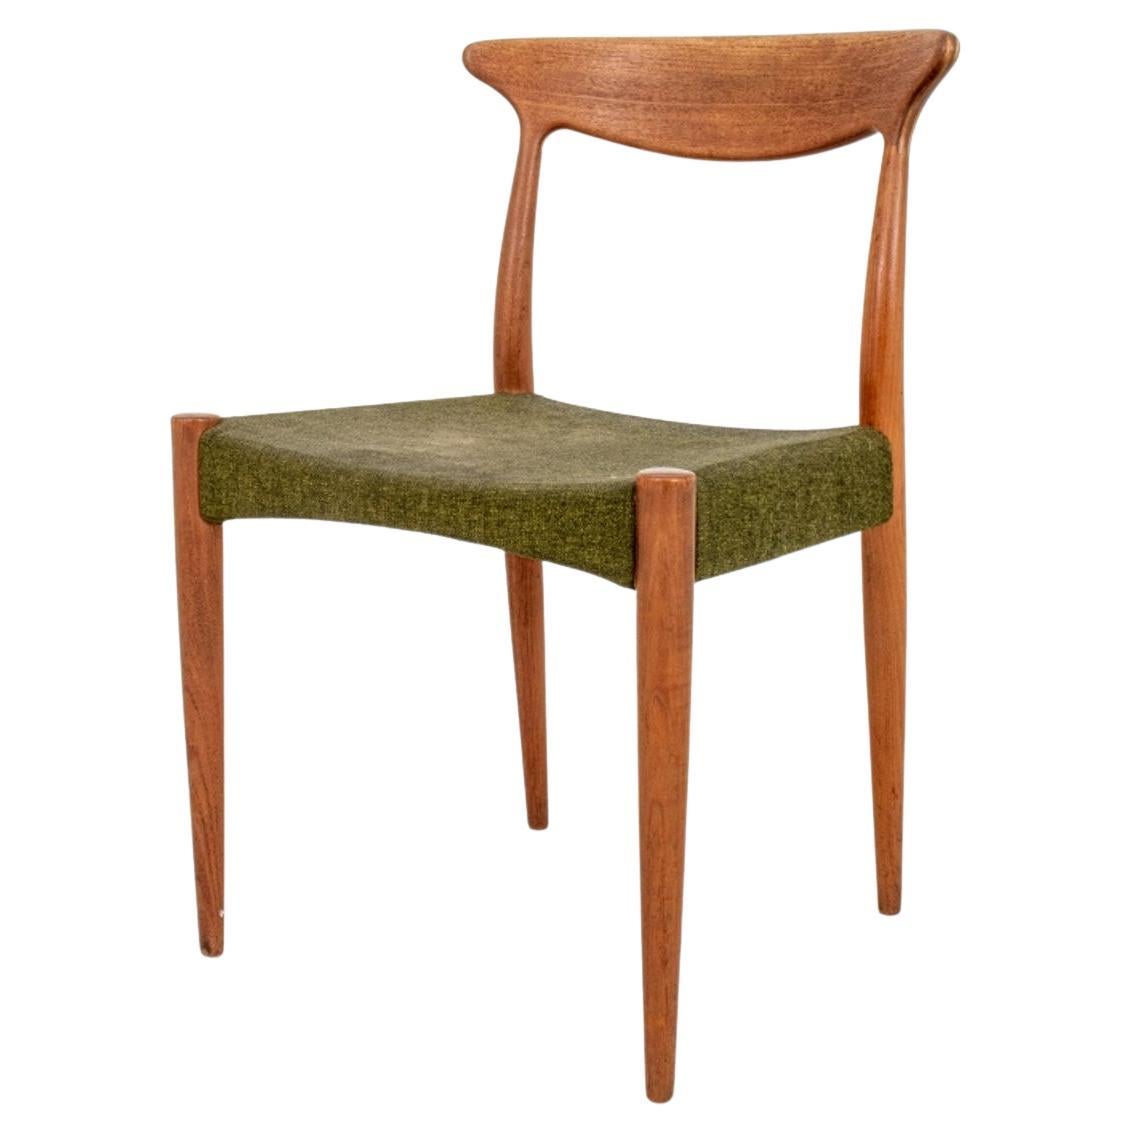 Arne Hovmand-Olsen (Danish, 1919-1989) Danish Mid-Century Modern teak wood side chair, the seat upholstered in green fabric, upon four slightly tapering legs, 